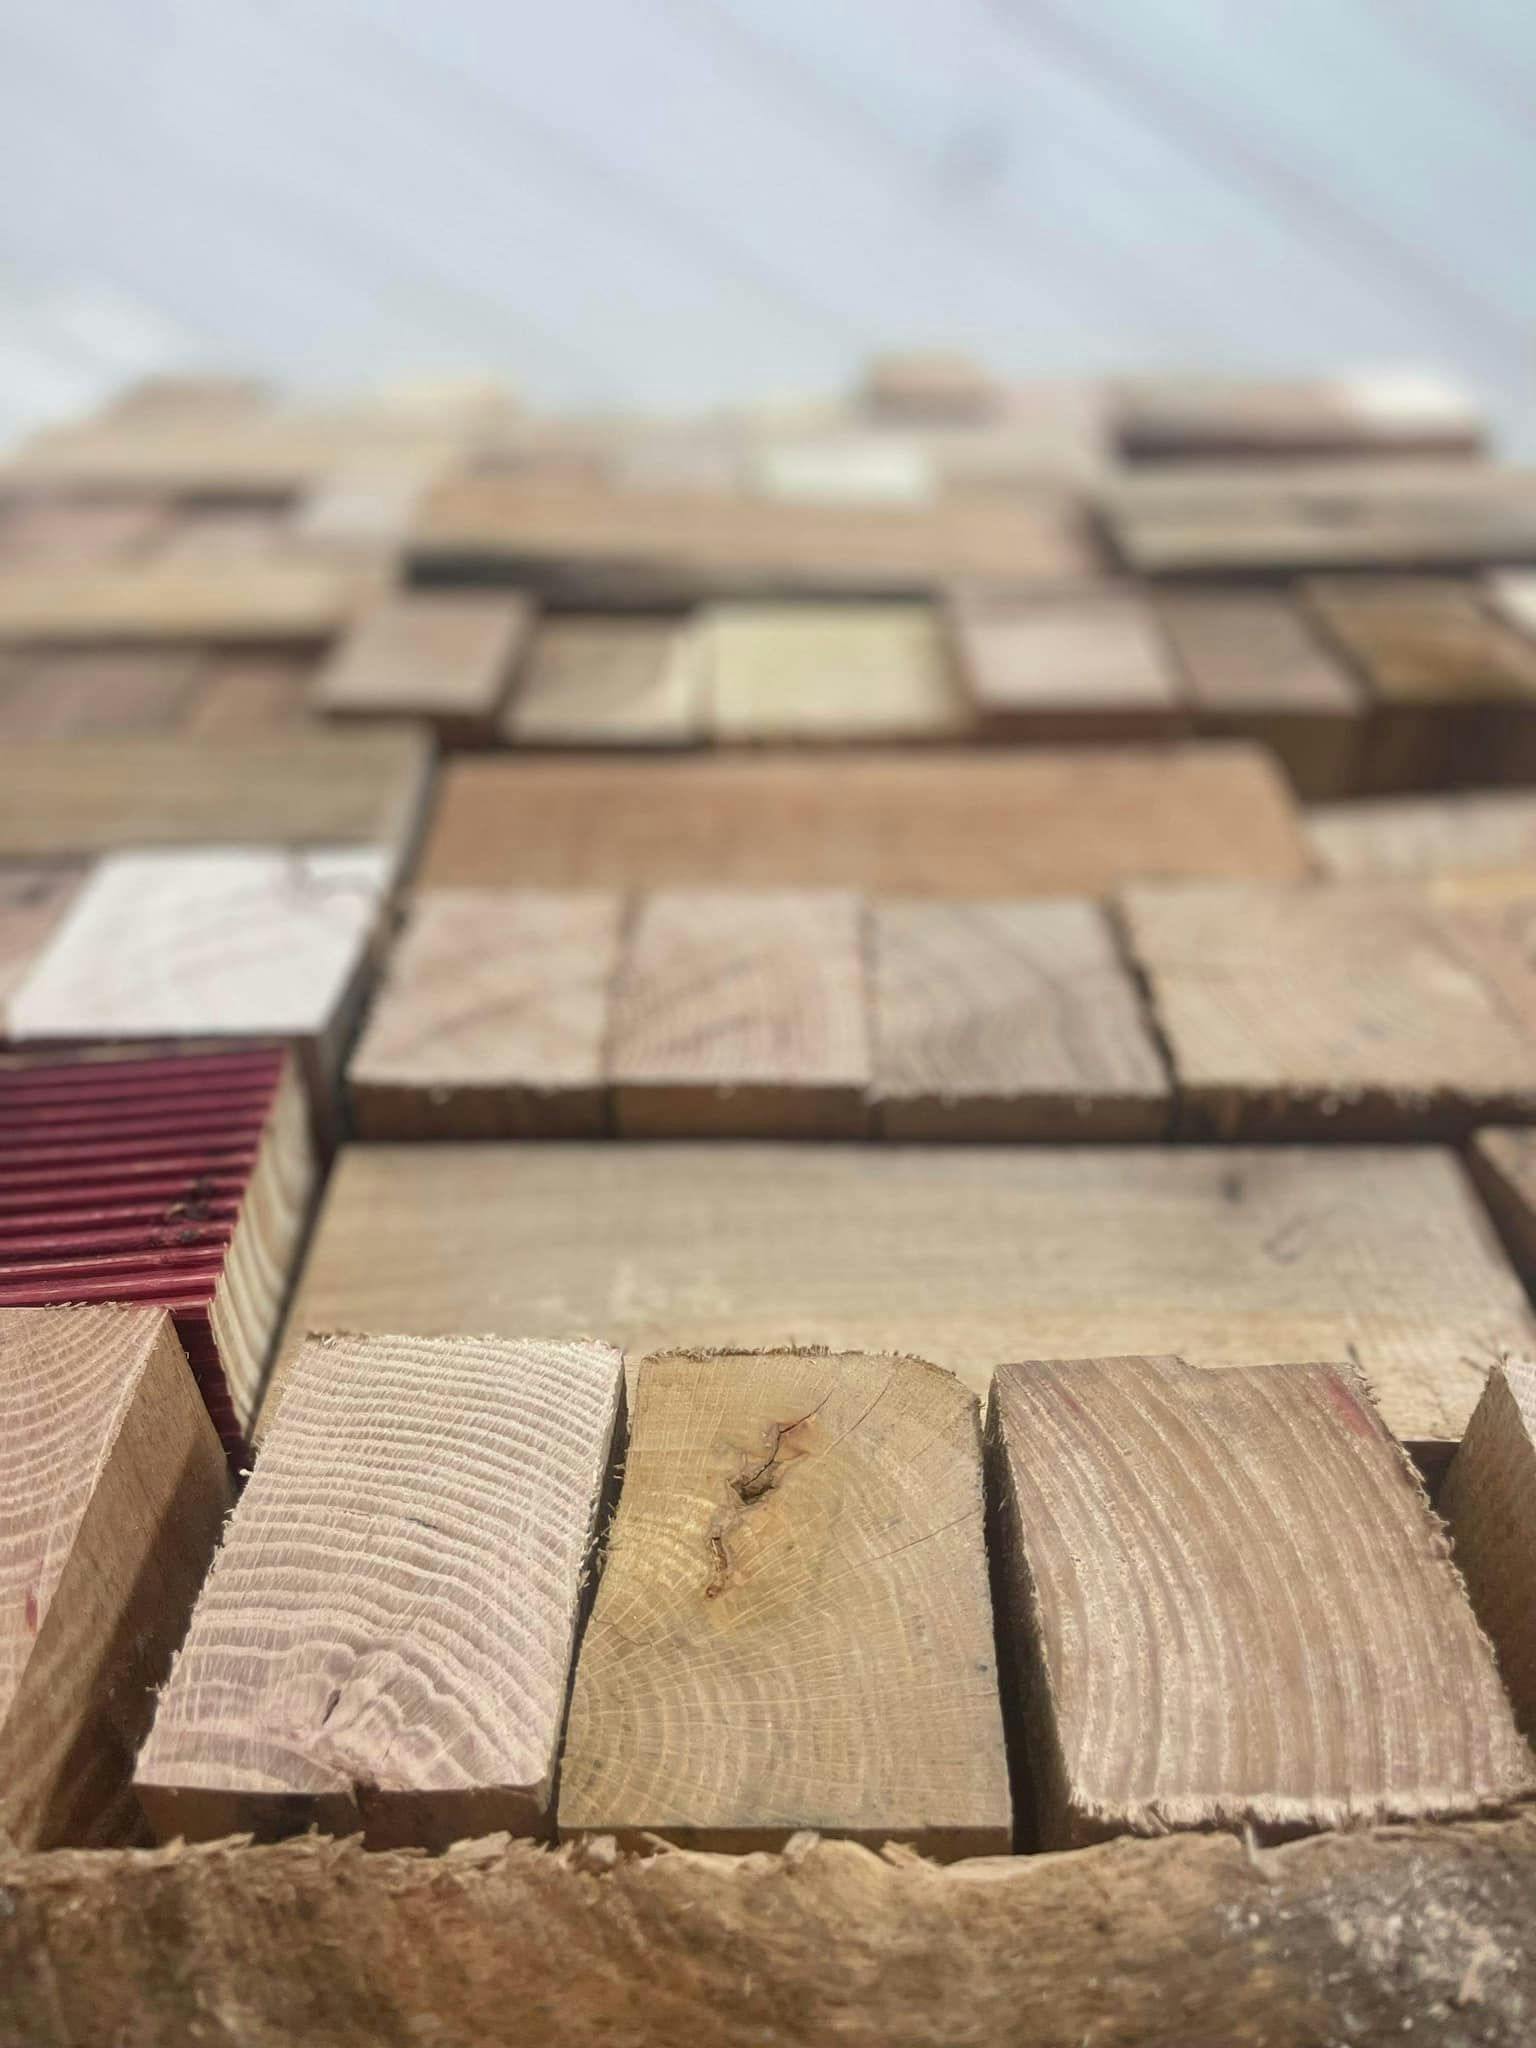 4x4x10 inch Blocks of Wood - Englewood CO 80111